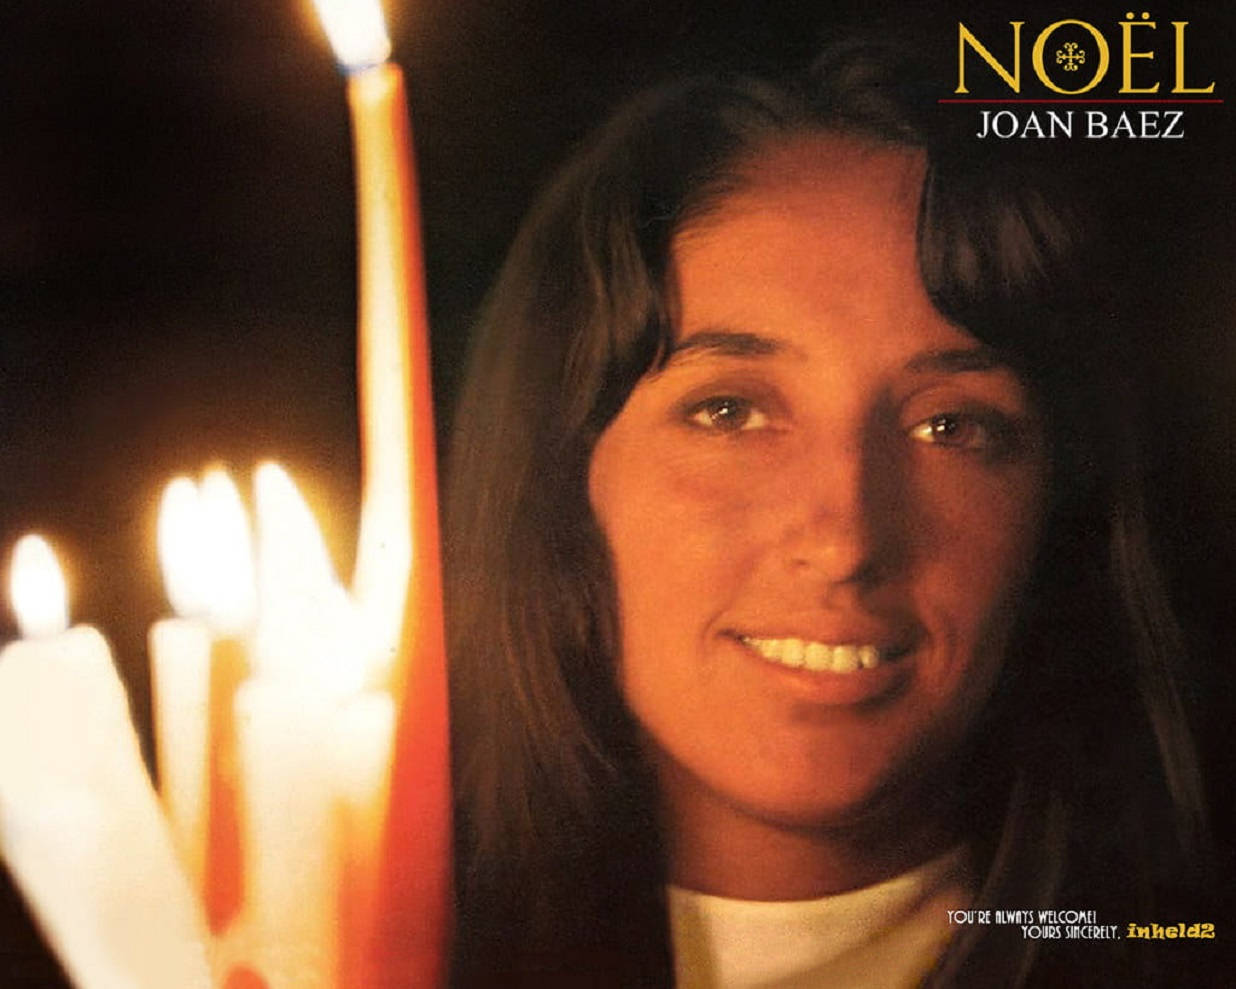 Joan Baez on Noel album cover Wallpaper